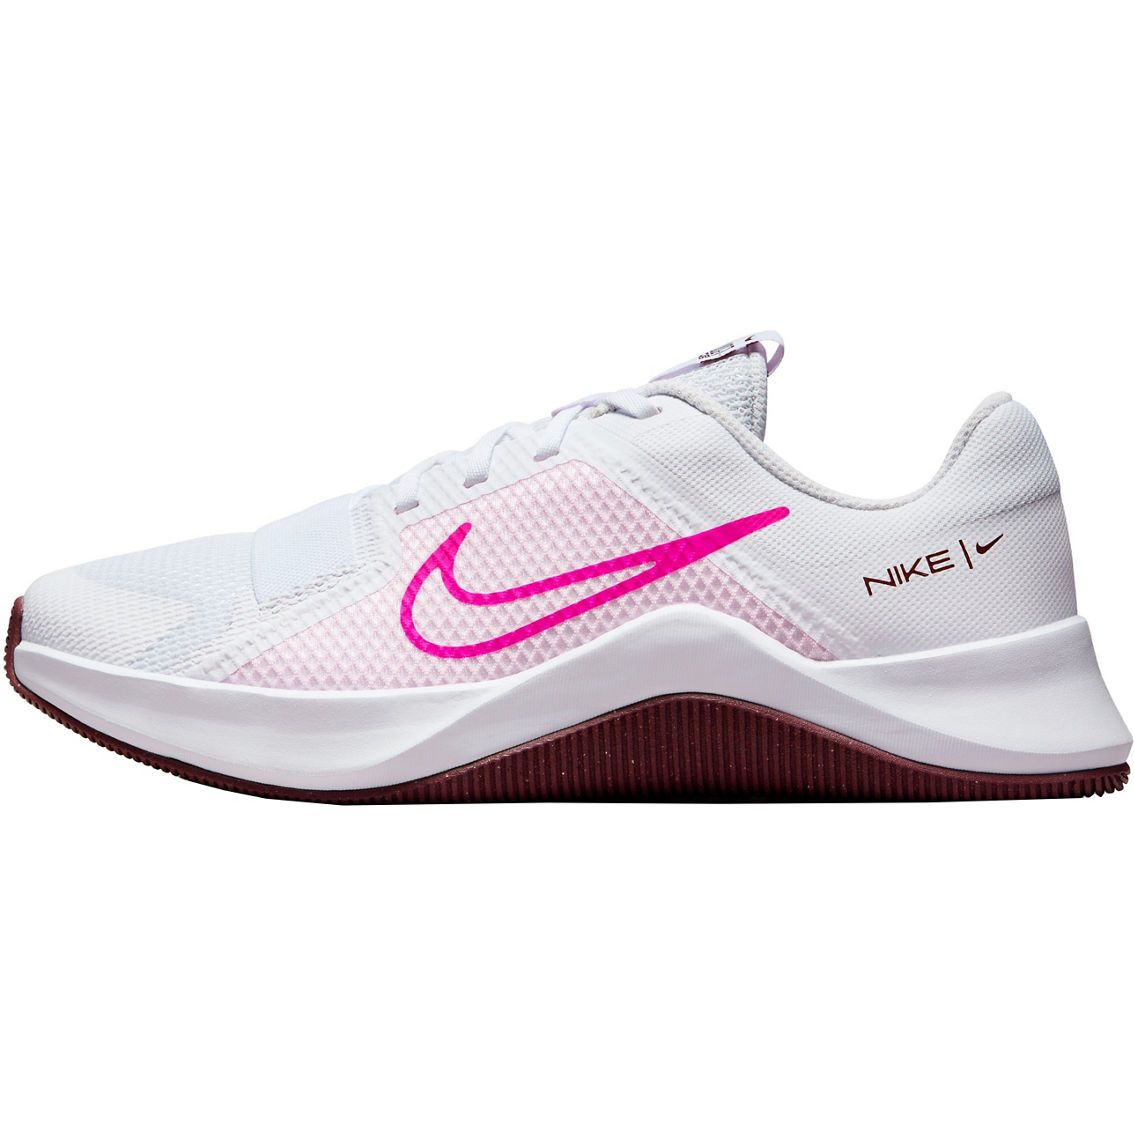 Nike Women's MC Trainer 2 Training Shoes - Image 3 of 9